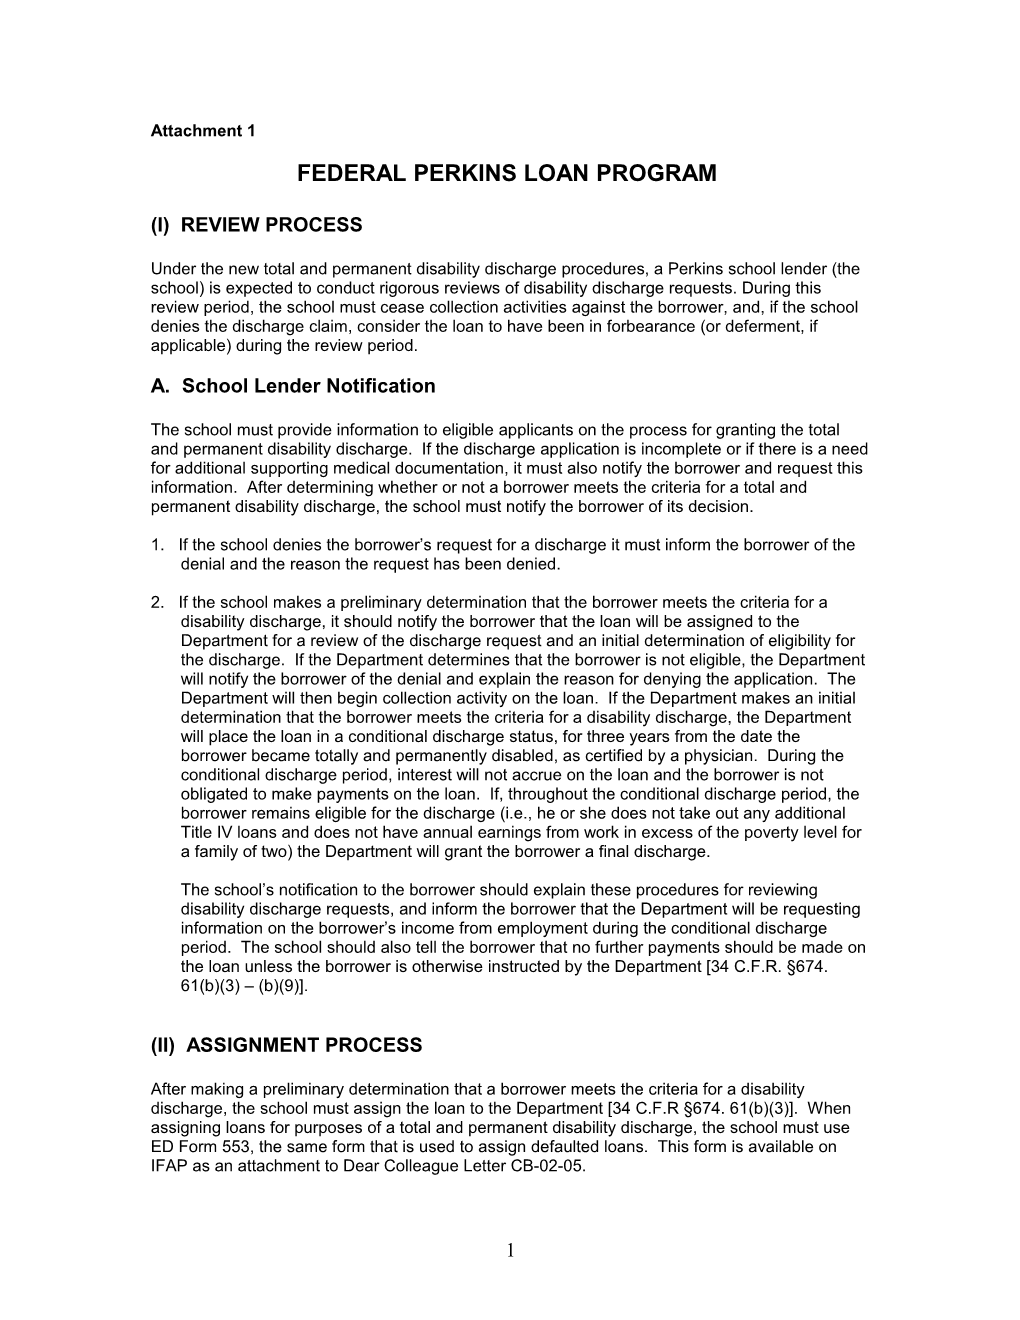 Federal Perkins Loan Program